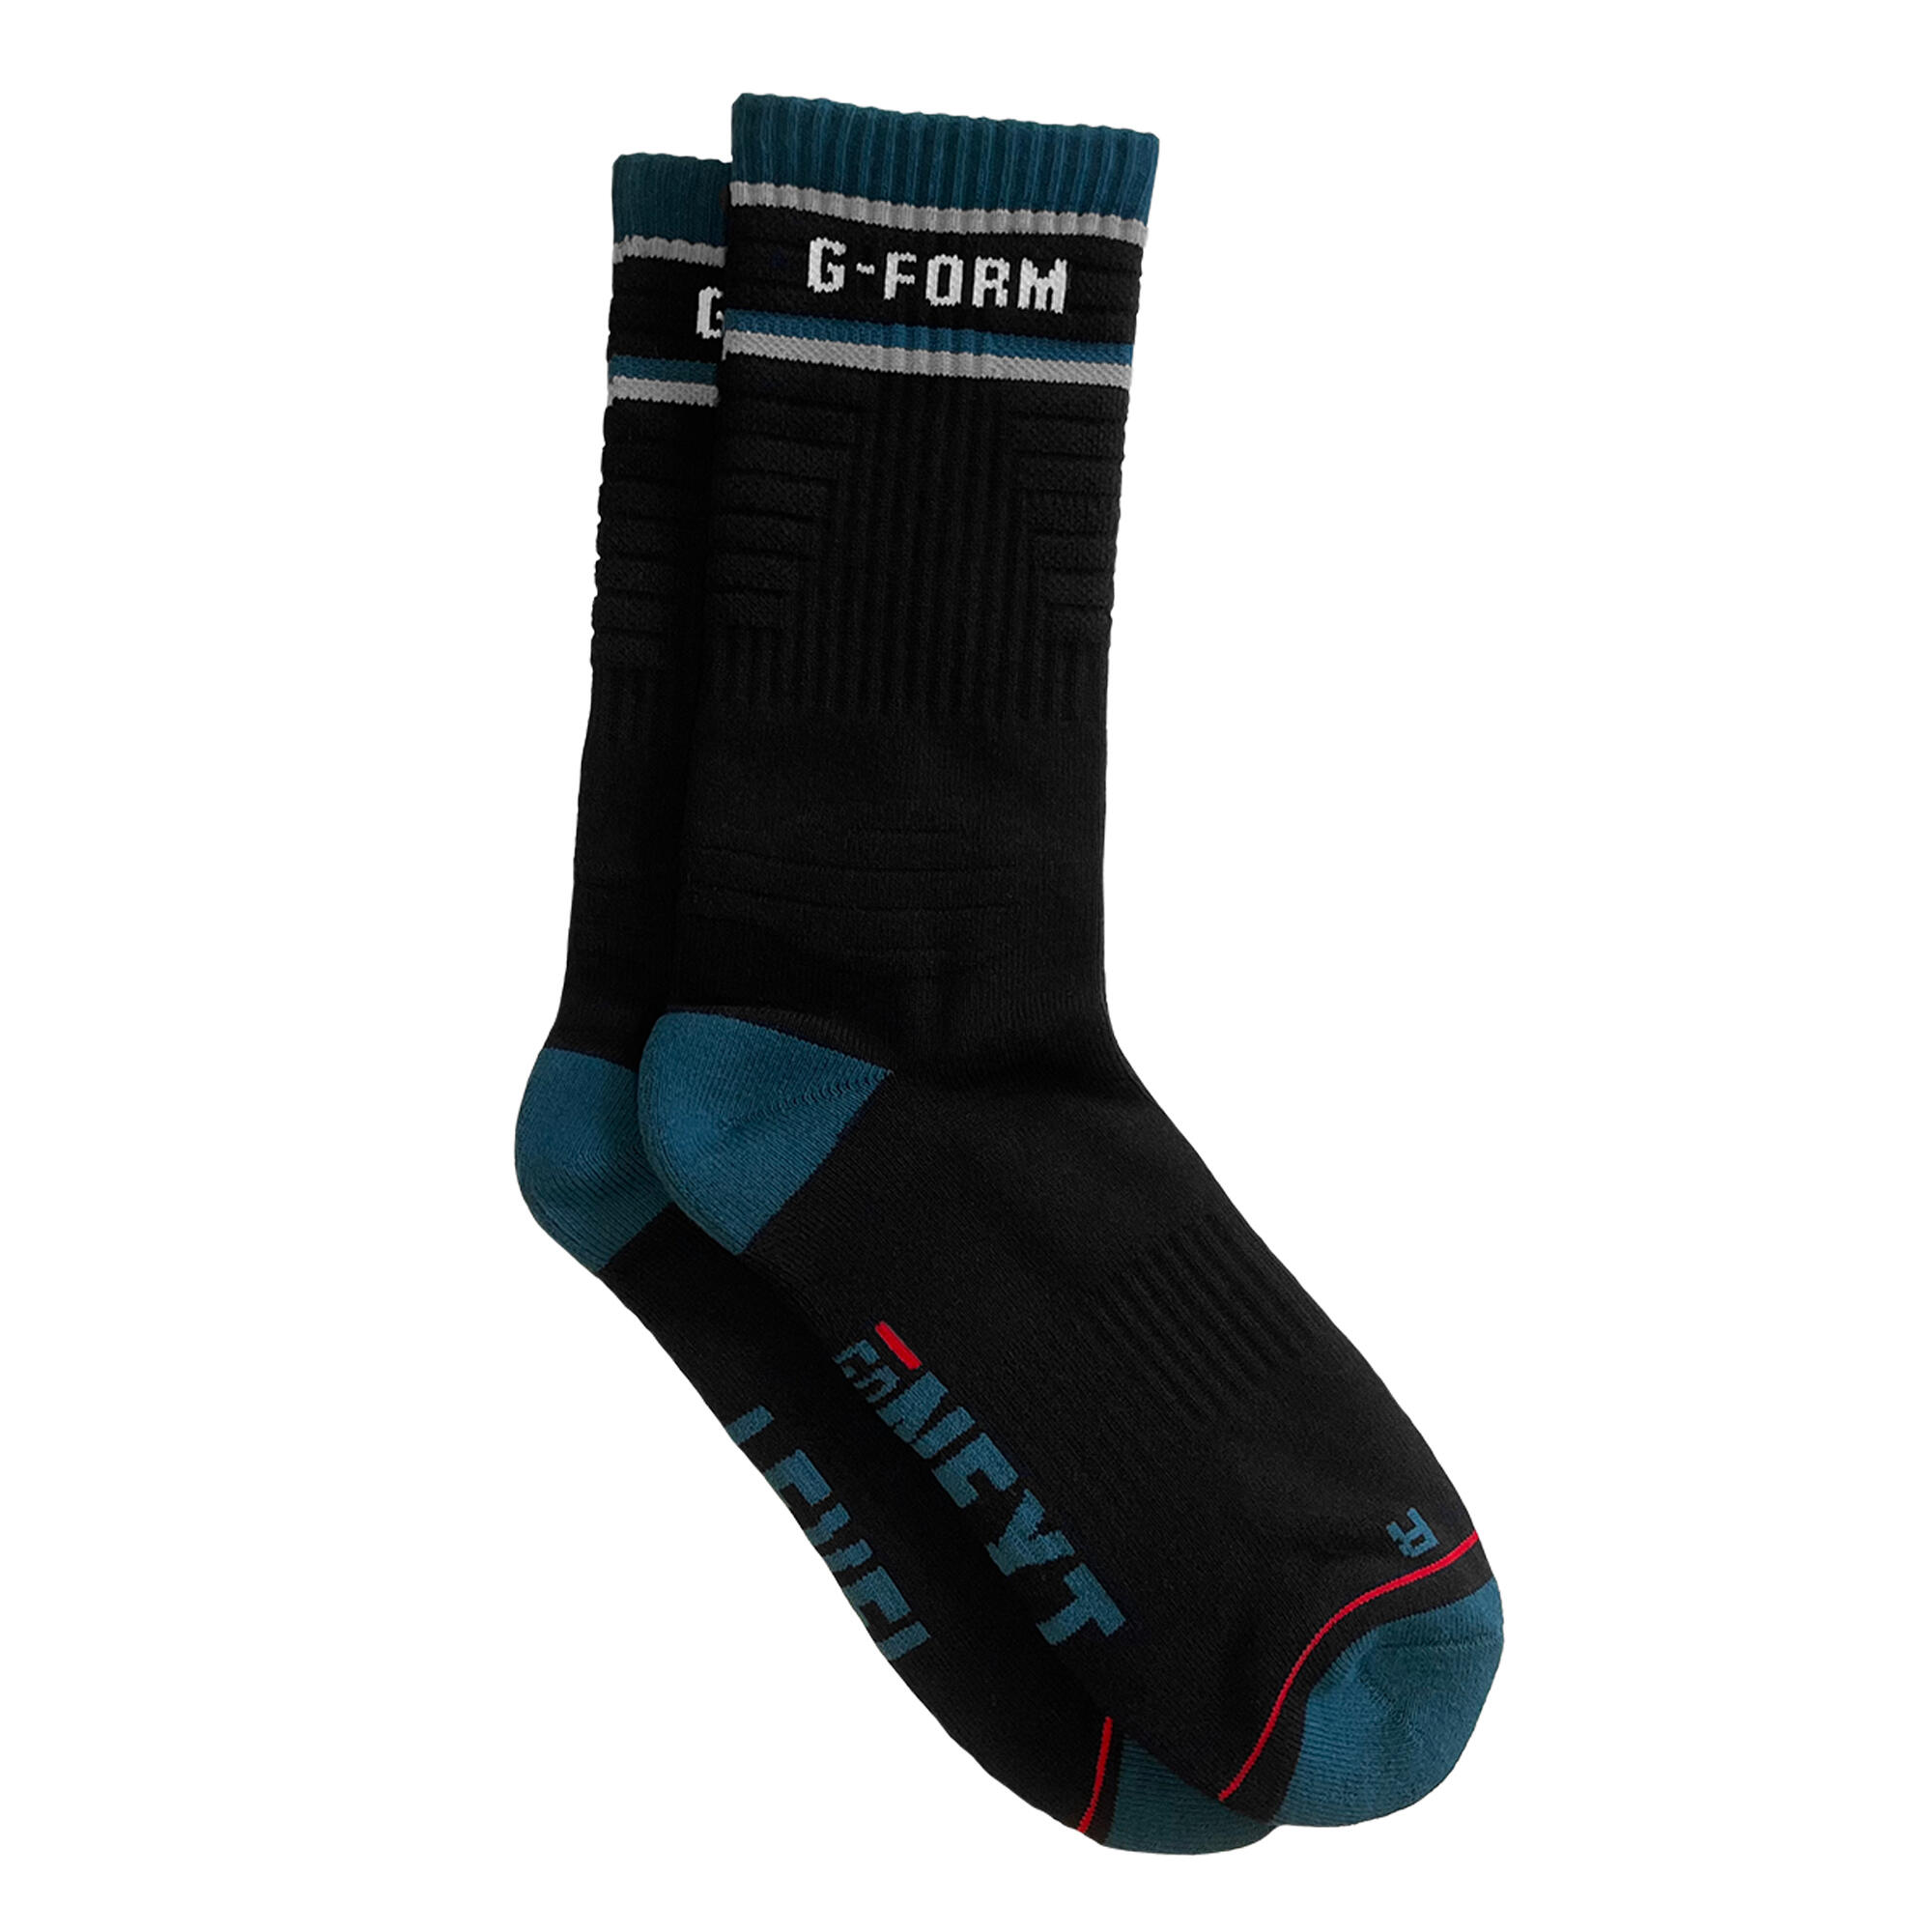 G-FORM G-Form Mid-Calf Sock Black Teal Grey S/M